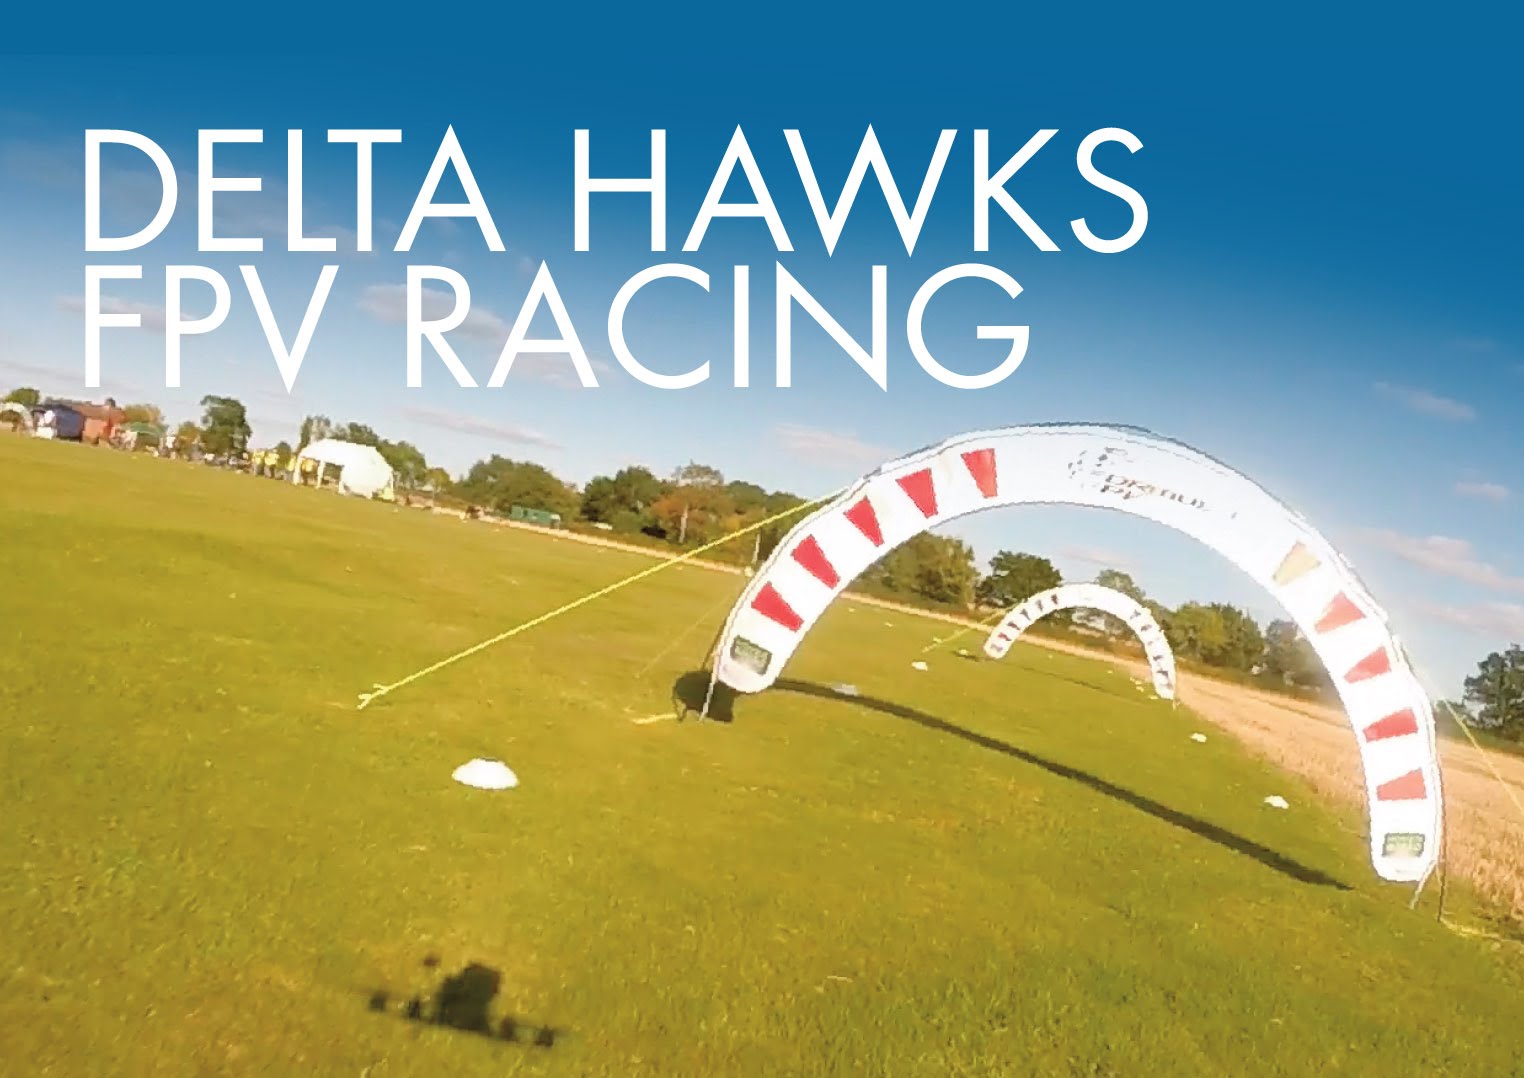 Delta Hawks FPV Racing